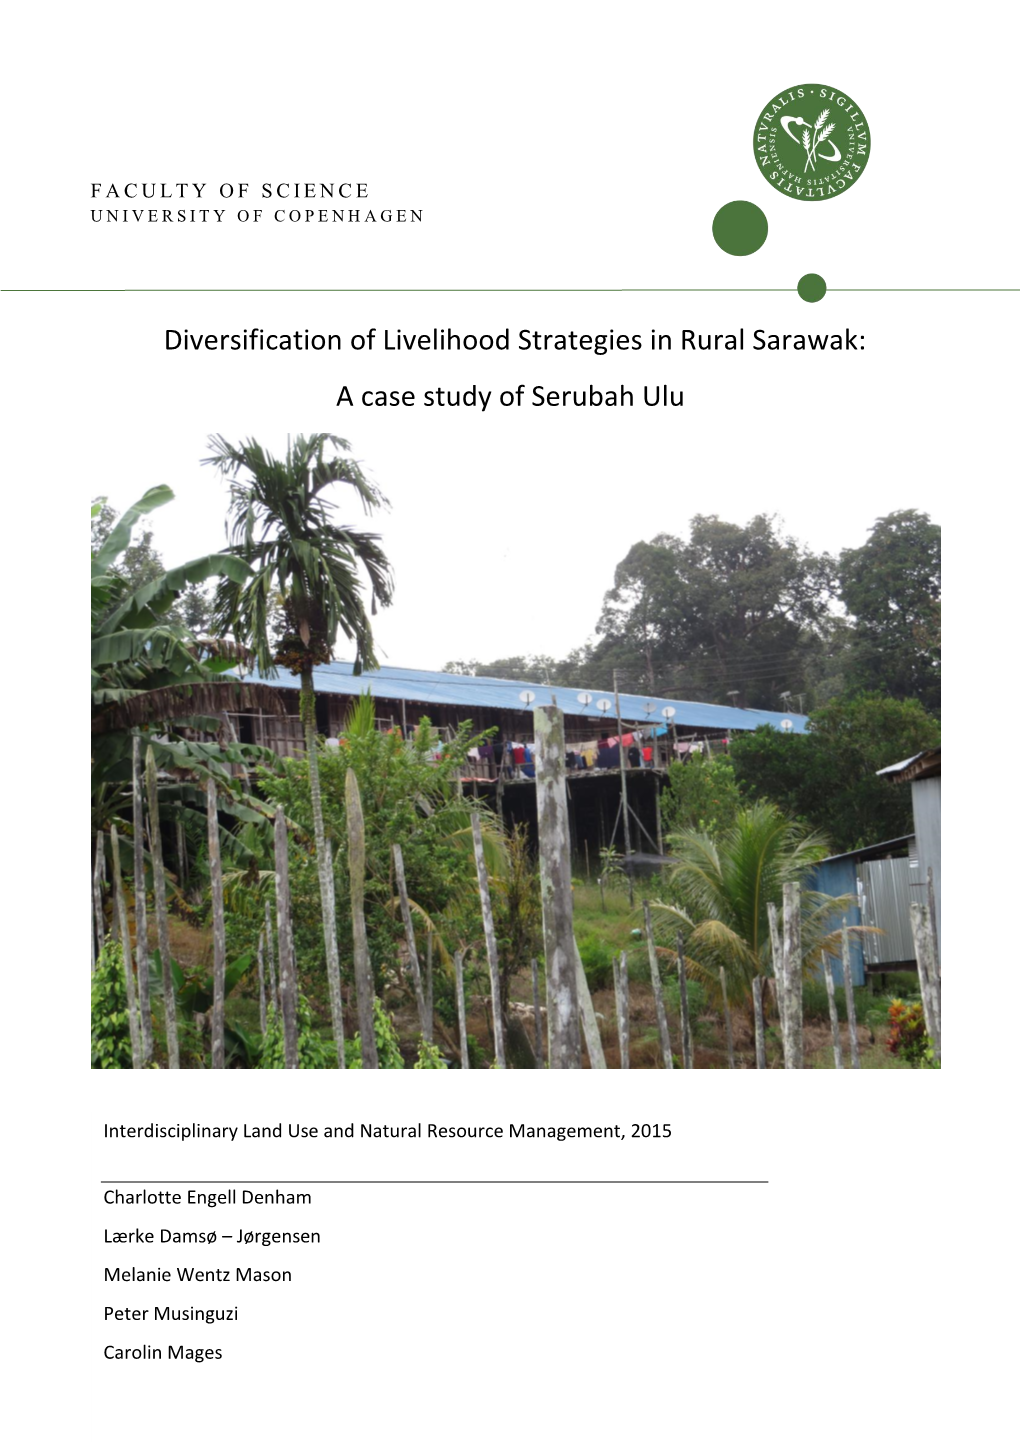 Diversification of Livelihood Strategies in Rural Sarawak: a Case Study of Serubah Ulu